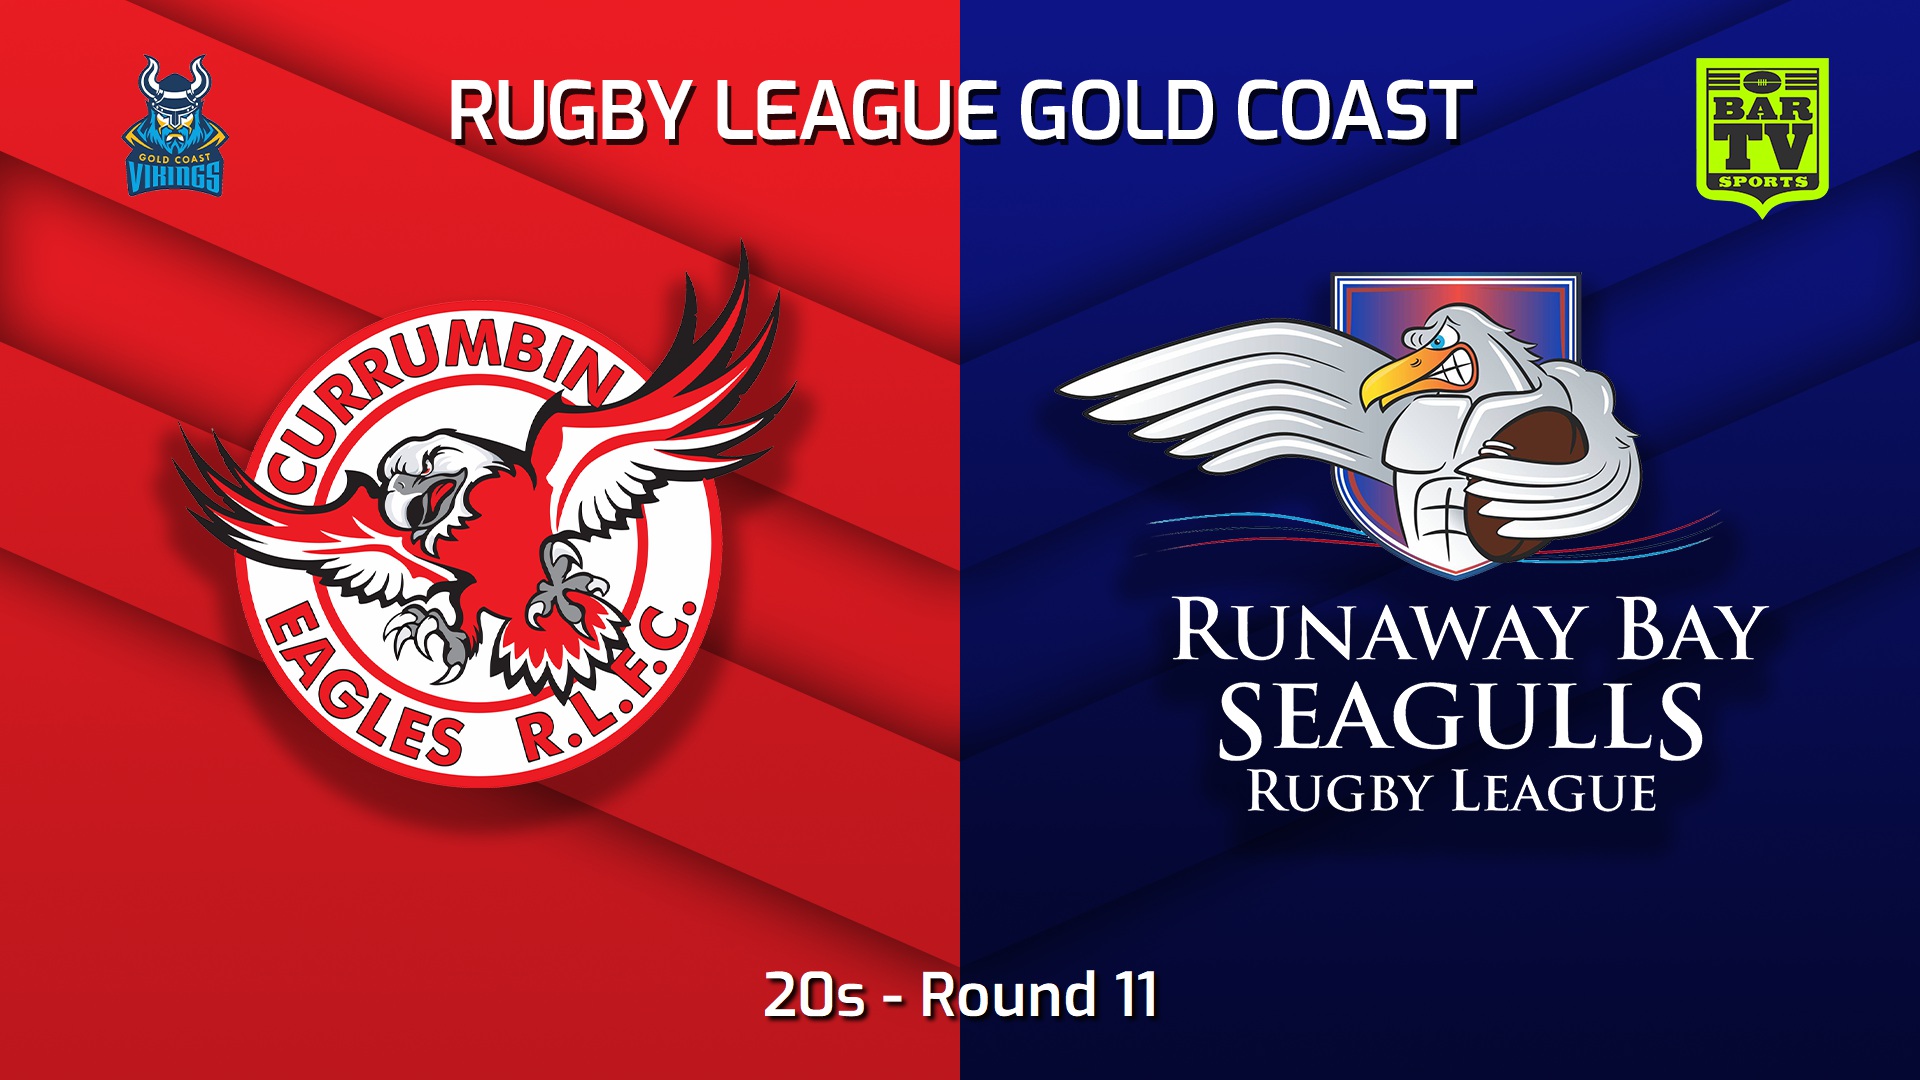 Gold Coast Round 11 - 20s